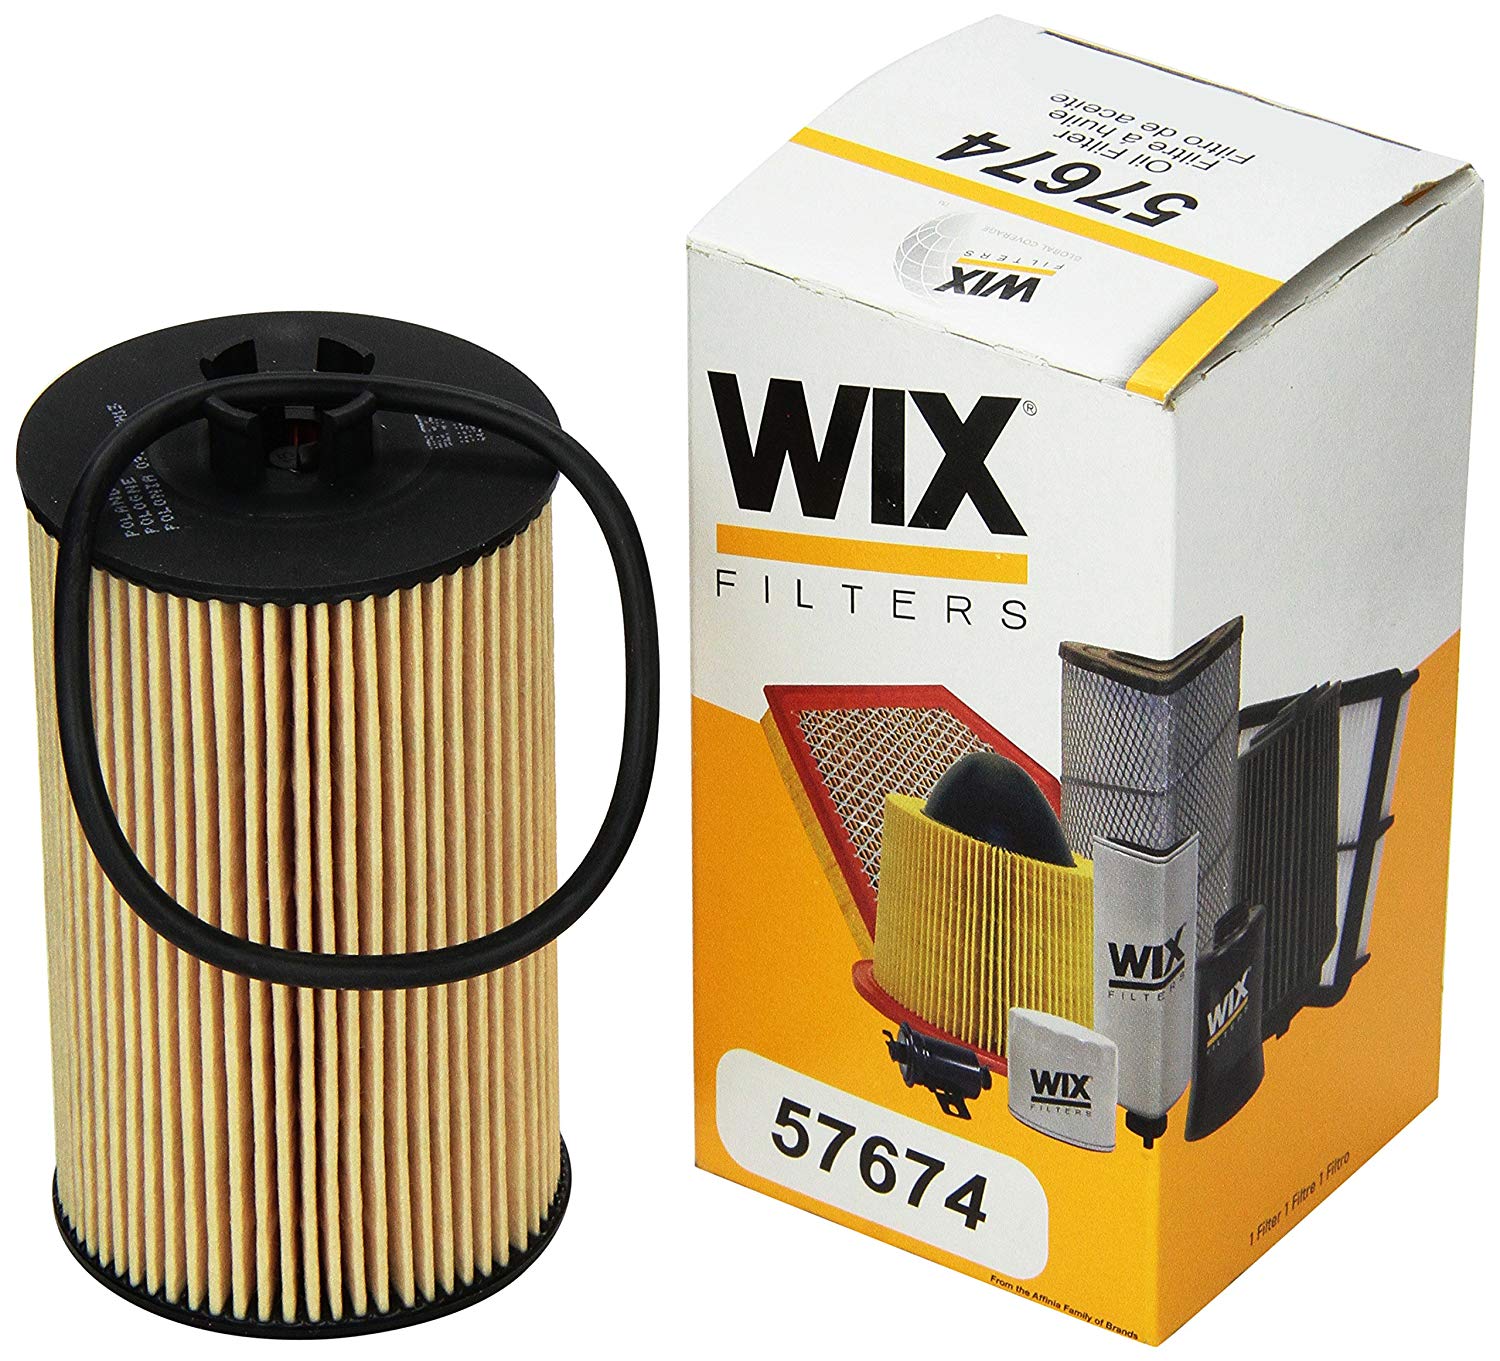 WIX Filters - 57674 Cartridge Lube Metal Free, Pack of 1